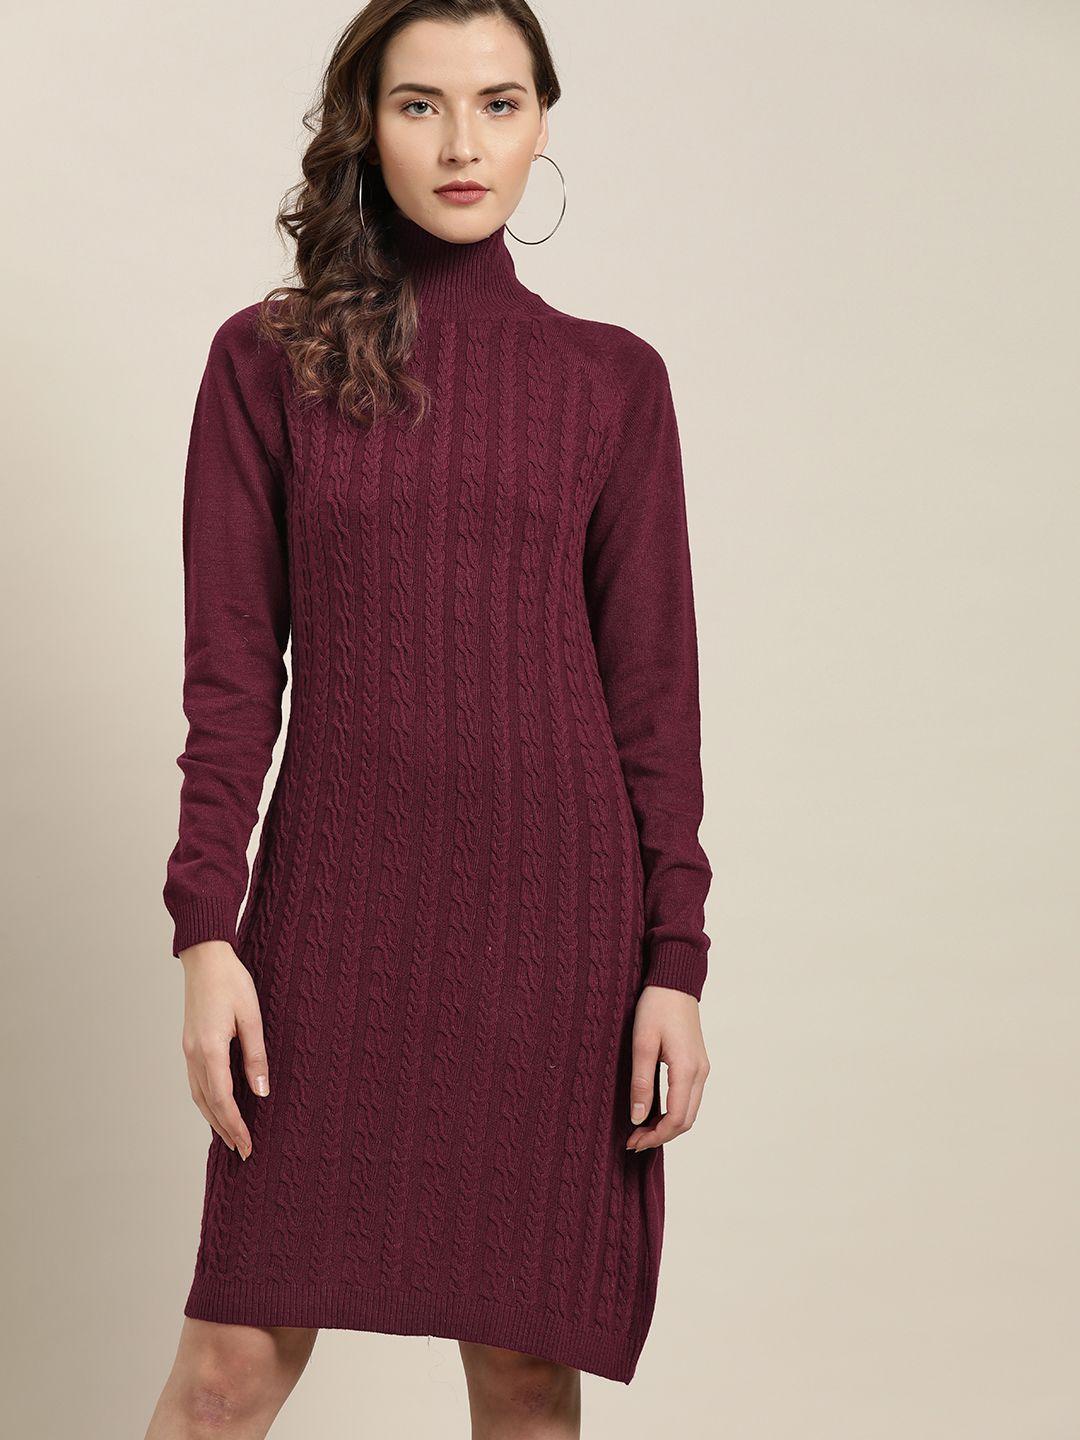 her by invictus women wine-coloured self design sheath dress